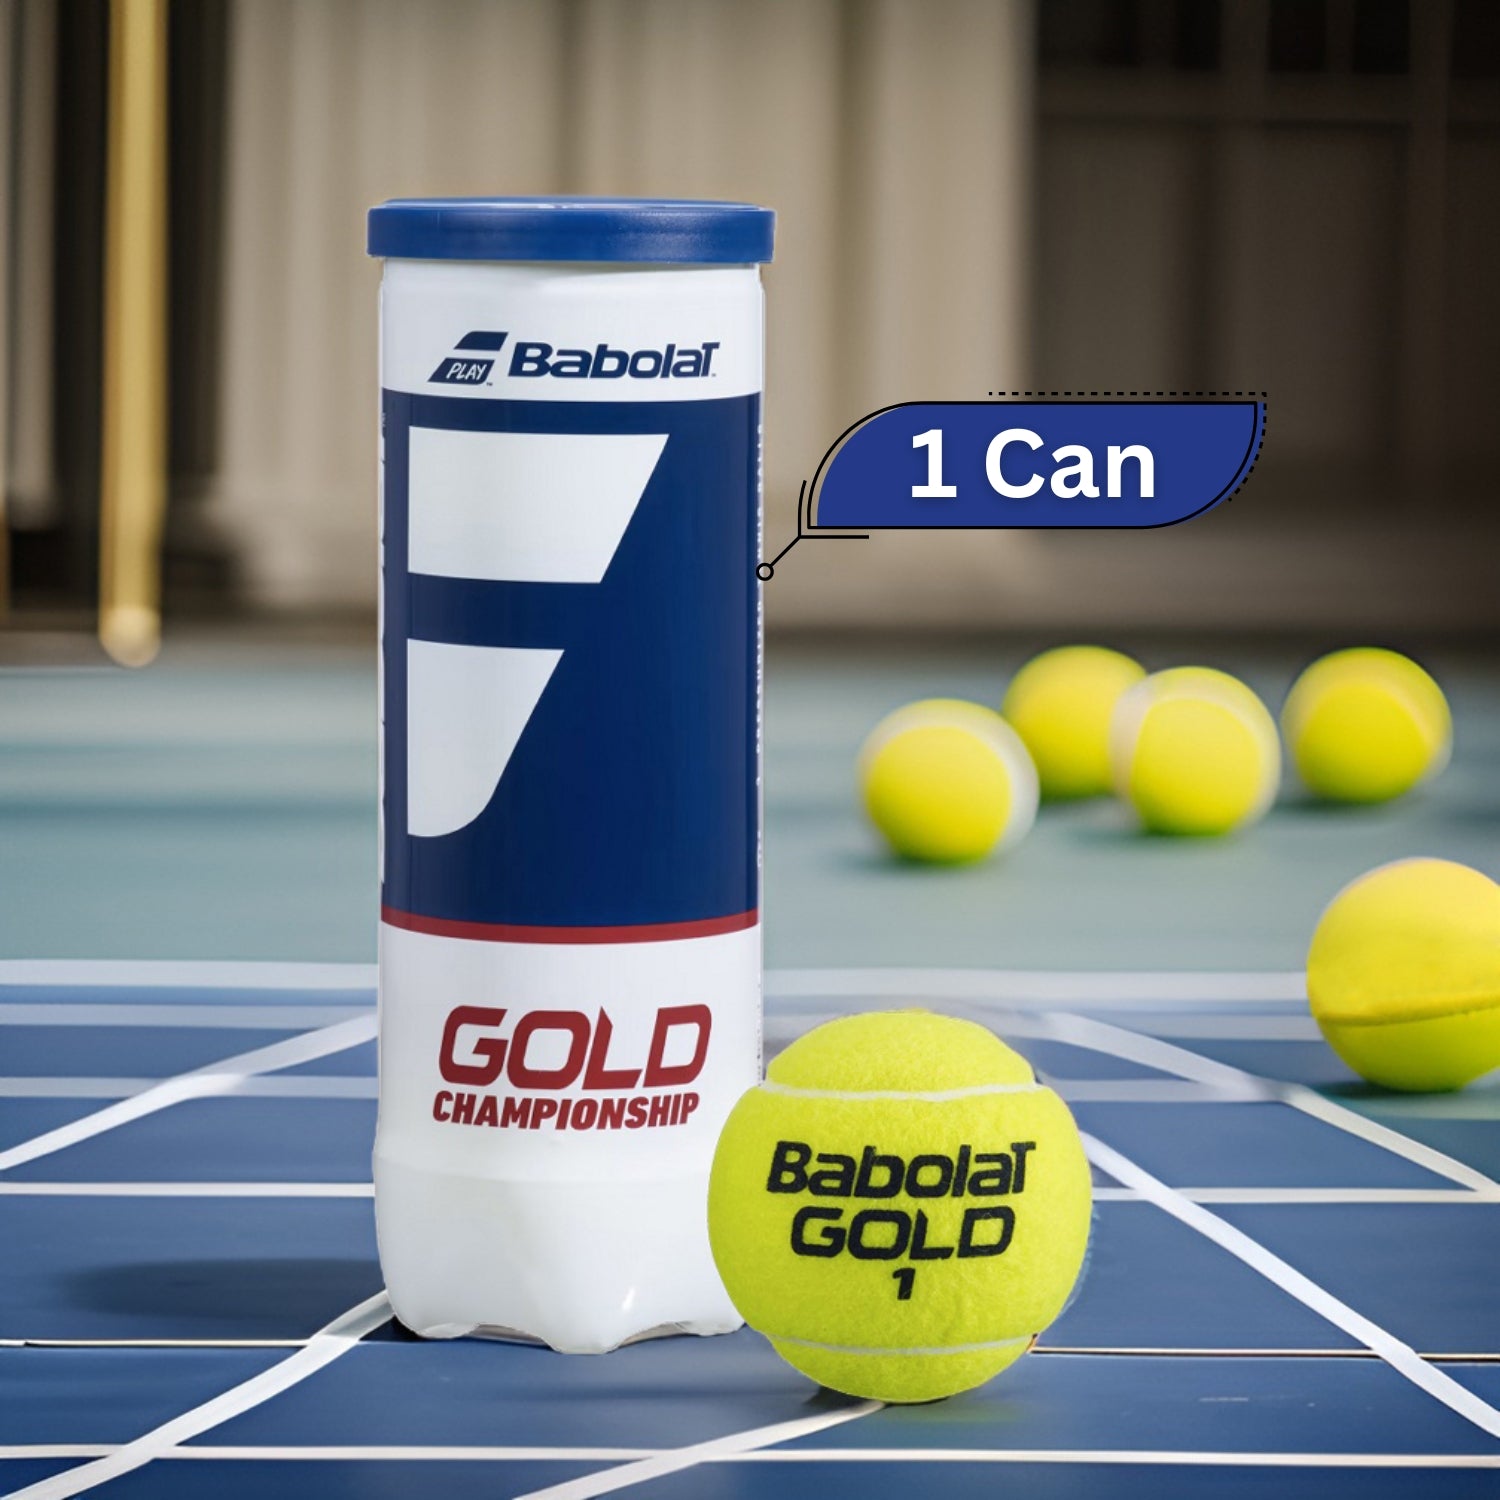 Babolat Gold Championship X3 Tennis Balls Can (1 Can) - Best Price online Prokicksports.com